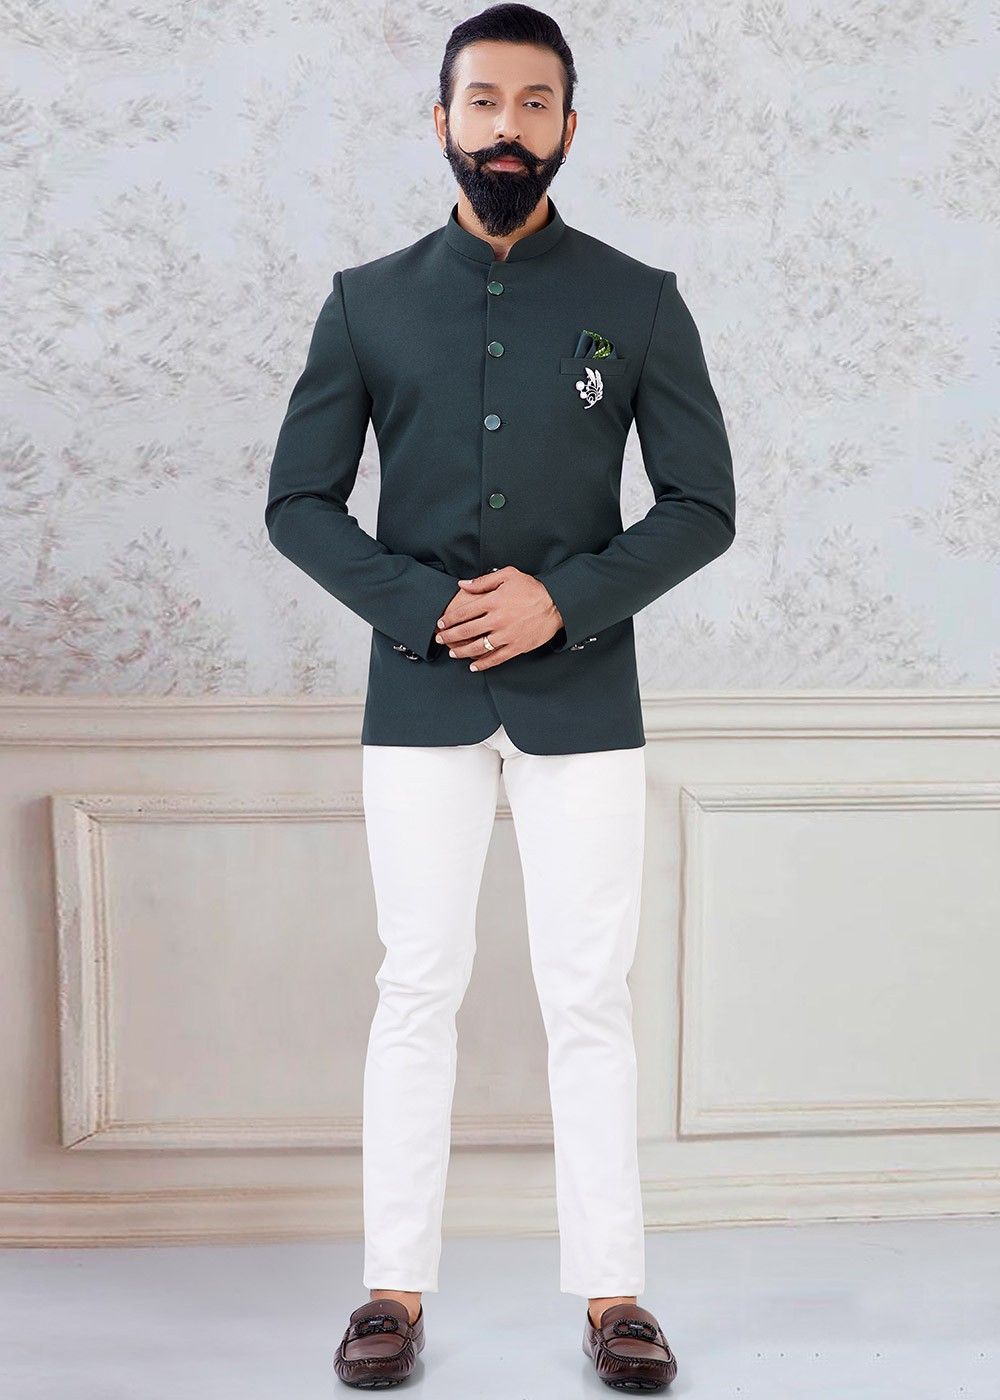 Indian New Stylish Ethnic Traditional Designer Partwear Wedding Bottle Green  Bandhgala Jodhpuri Suit for Men. - Etsy